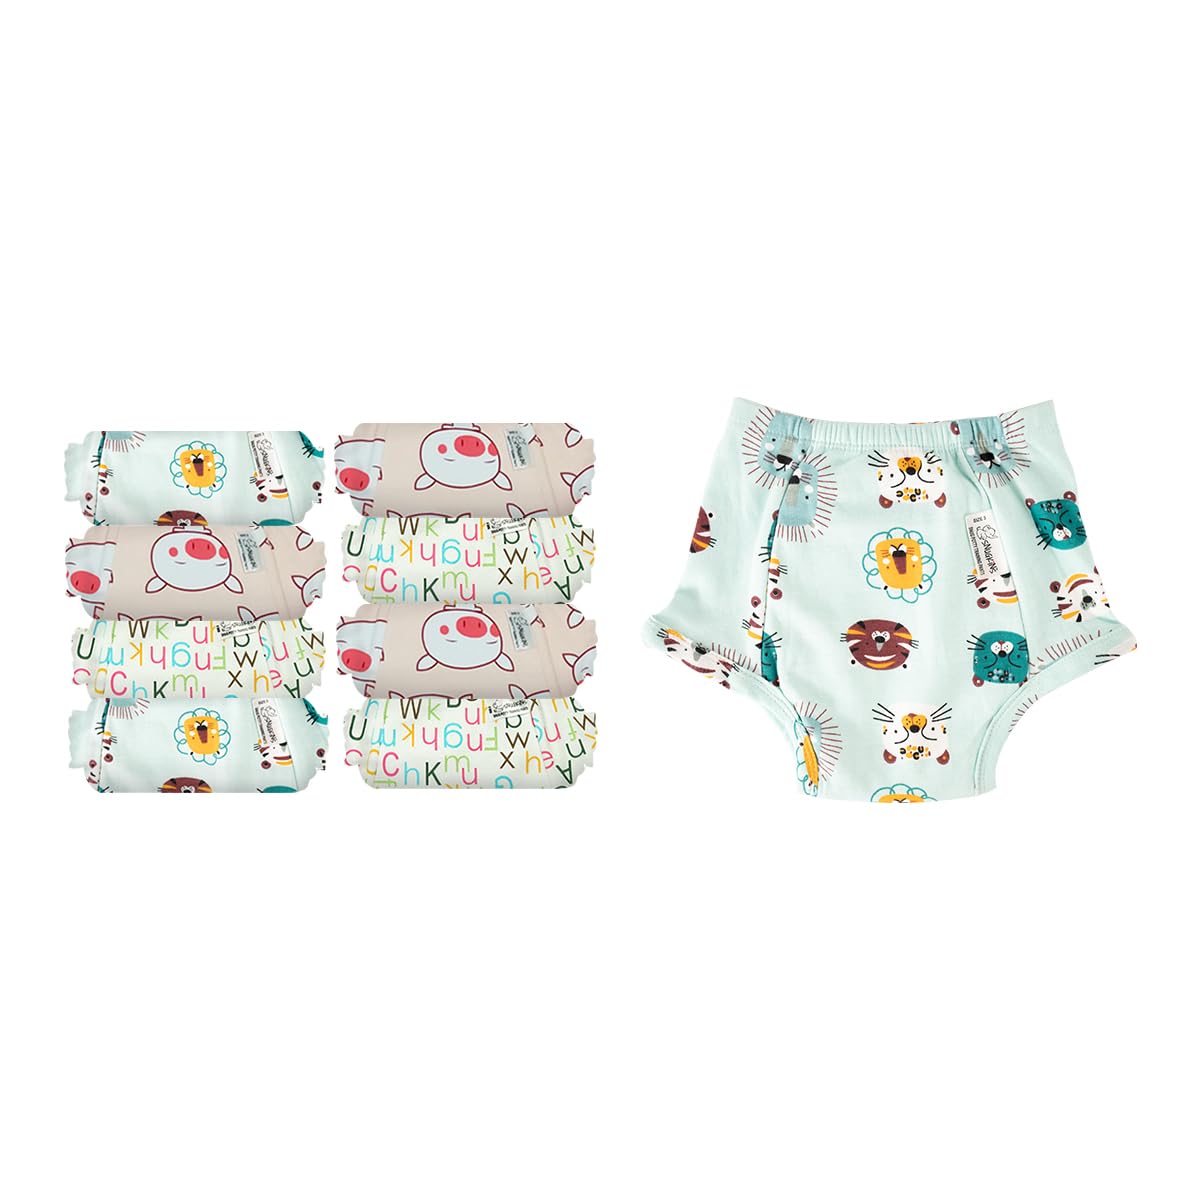 Snug Potty Training Pull-up Pants for Babies / Kids